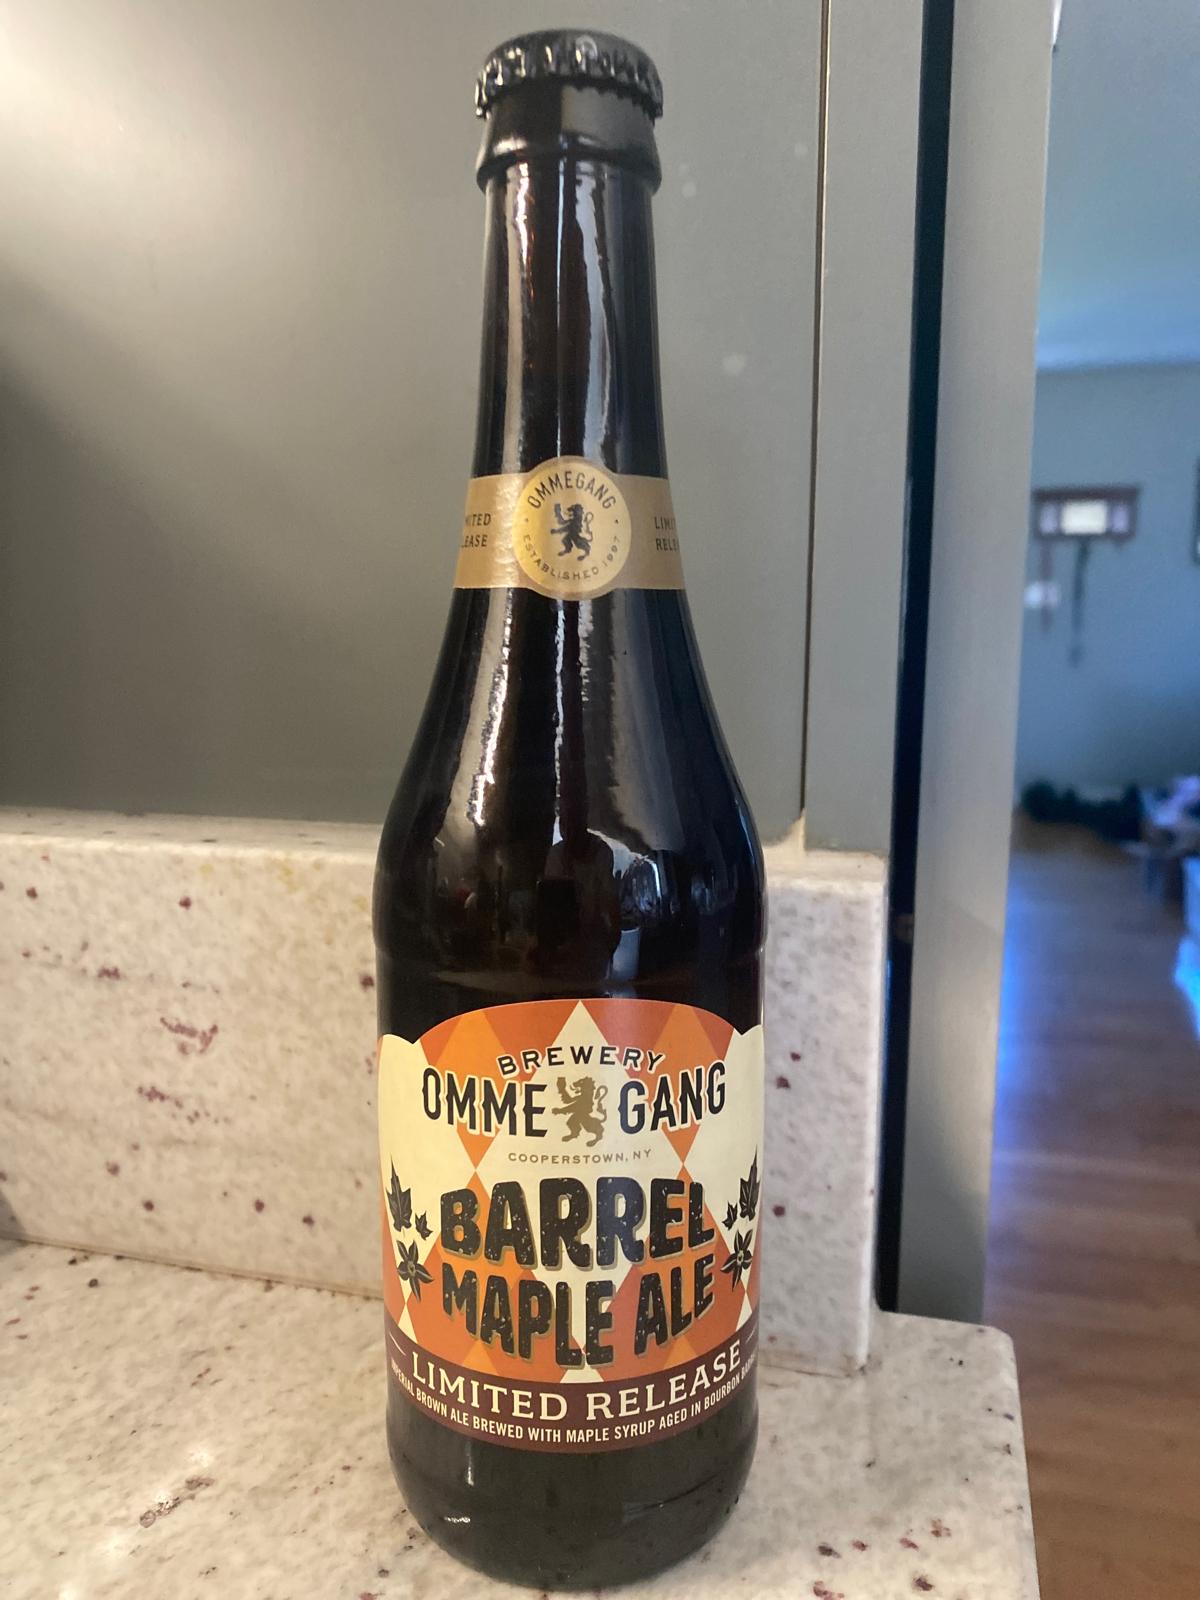 Barrel Maple Ale